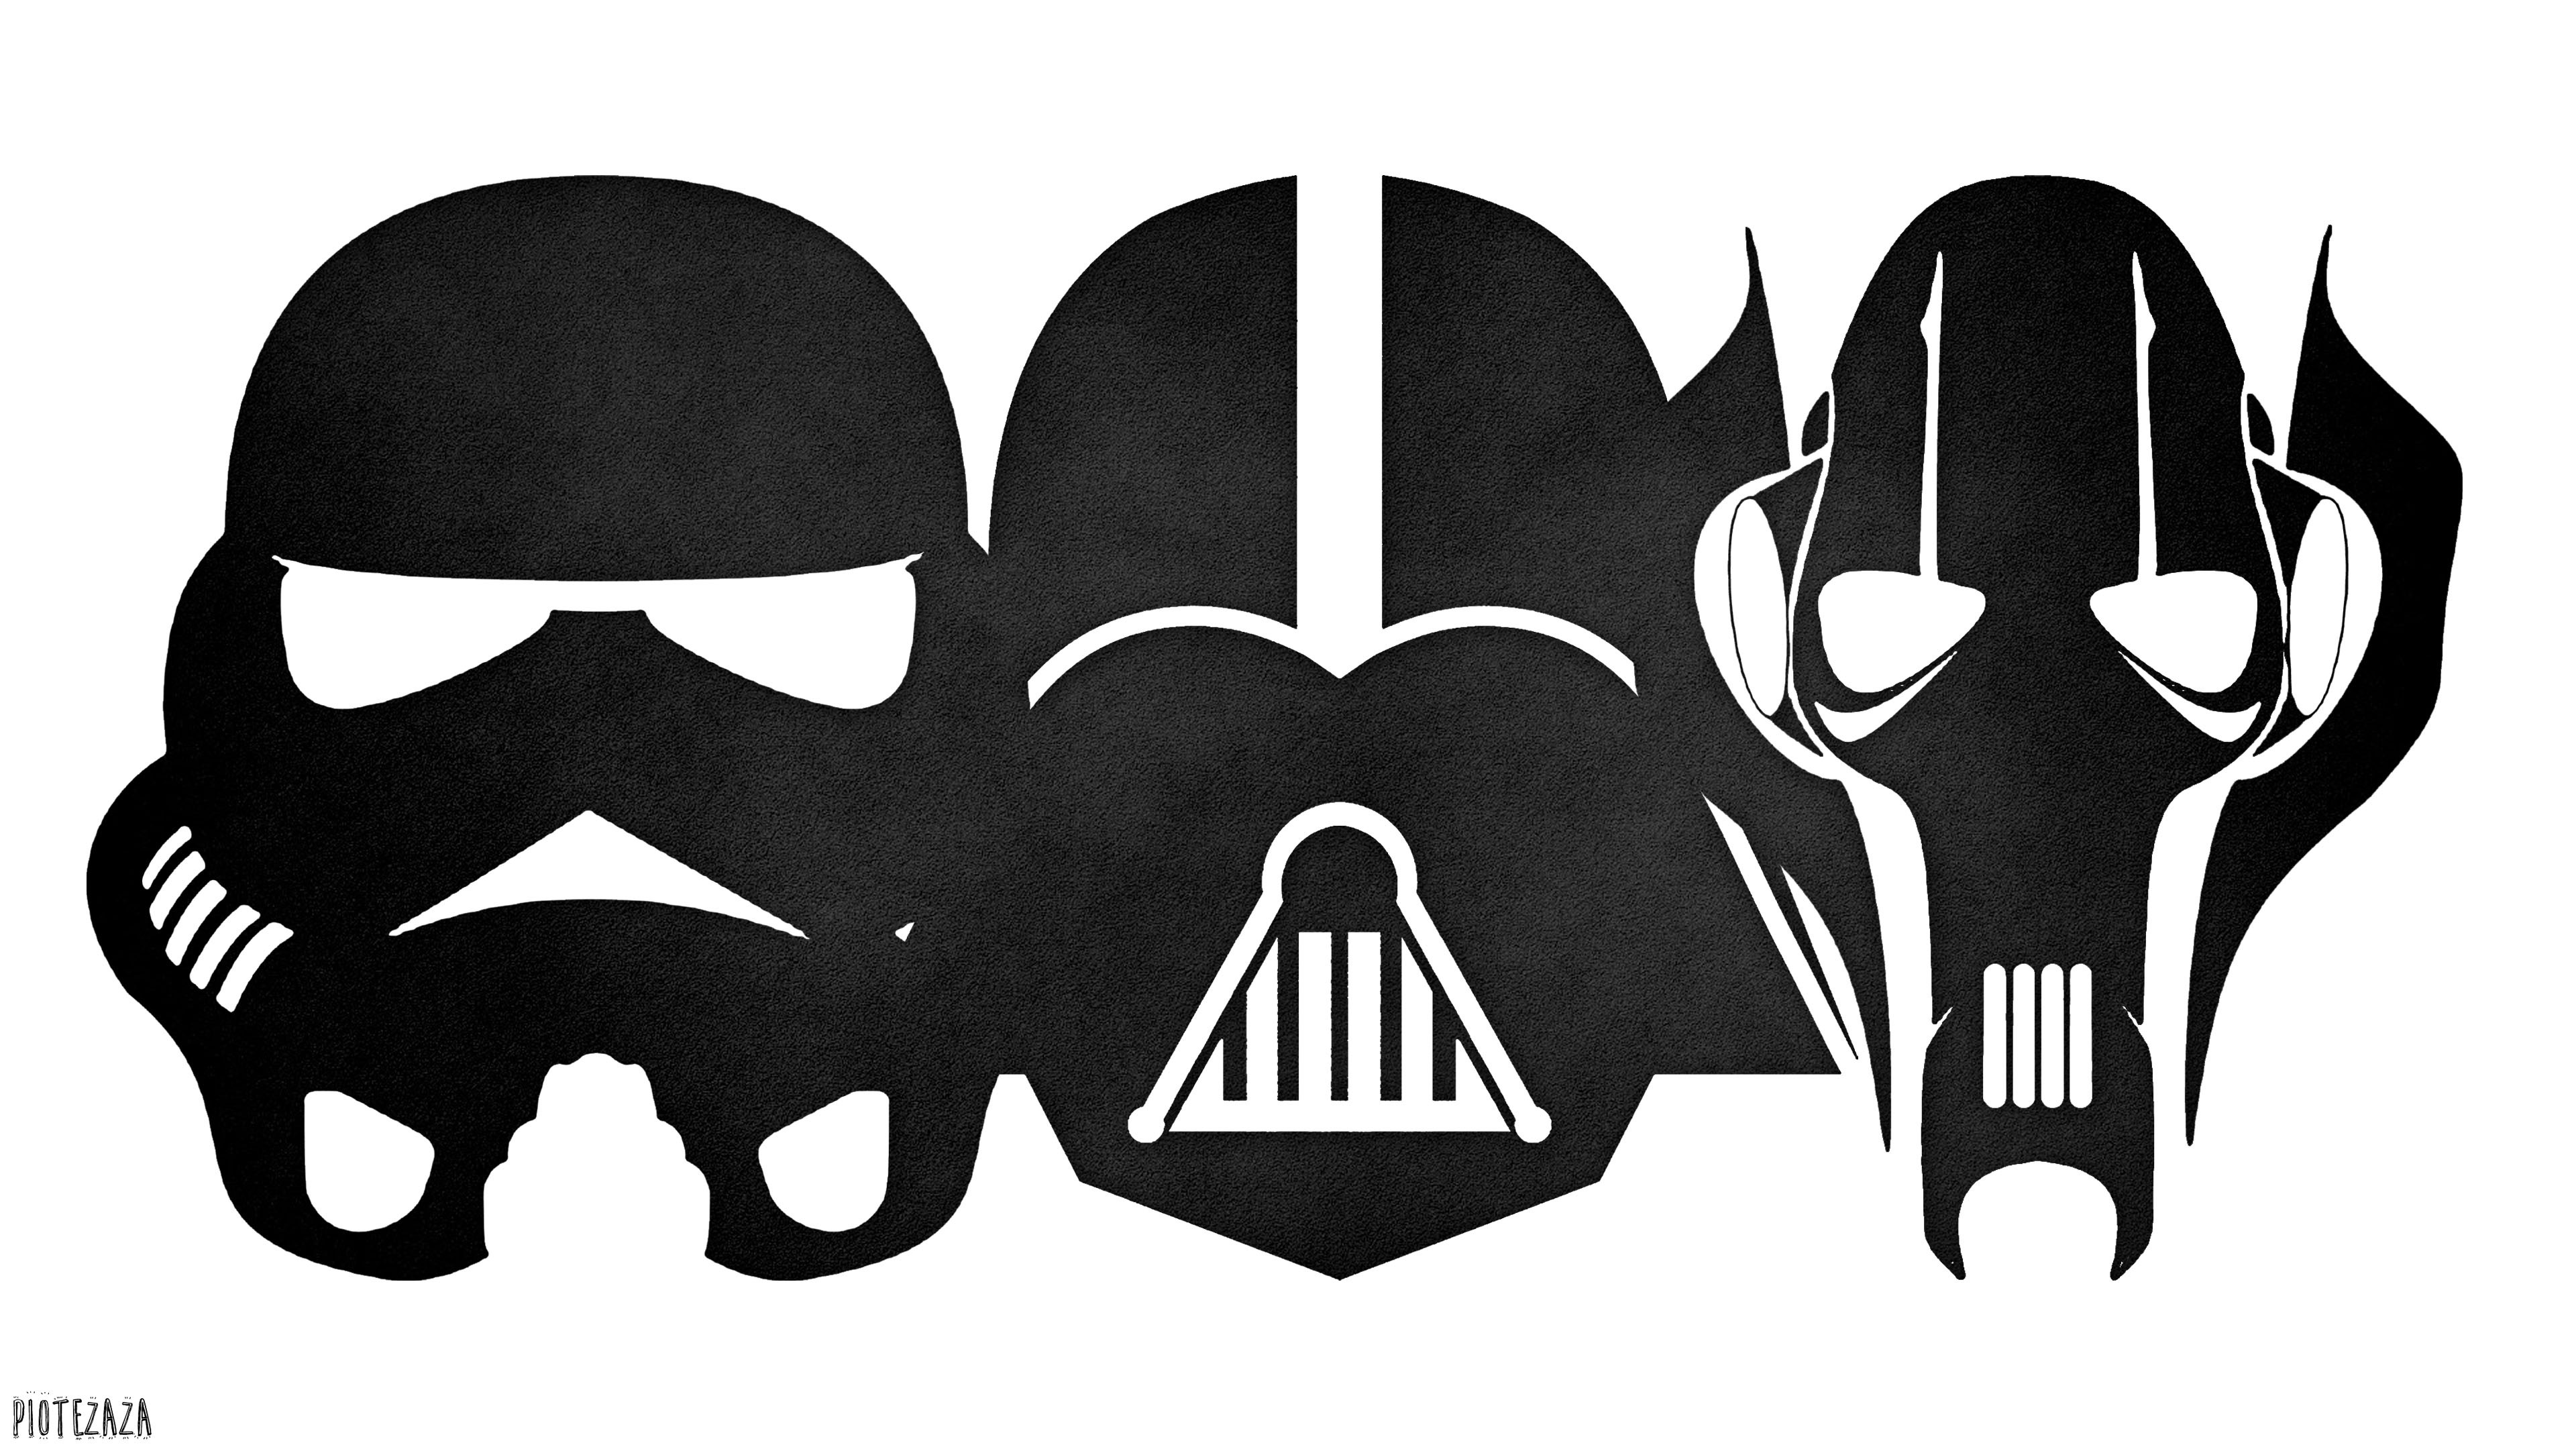 General 3840x2160 monochrome Star Wars helmet stormtrooper science fiction Imperial Stormtrooper Darth Vader General Grievous Star Wars Villains movie characters